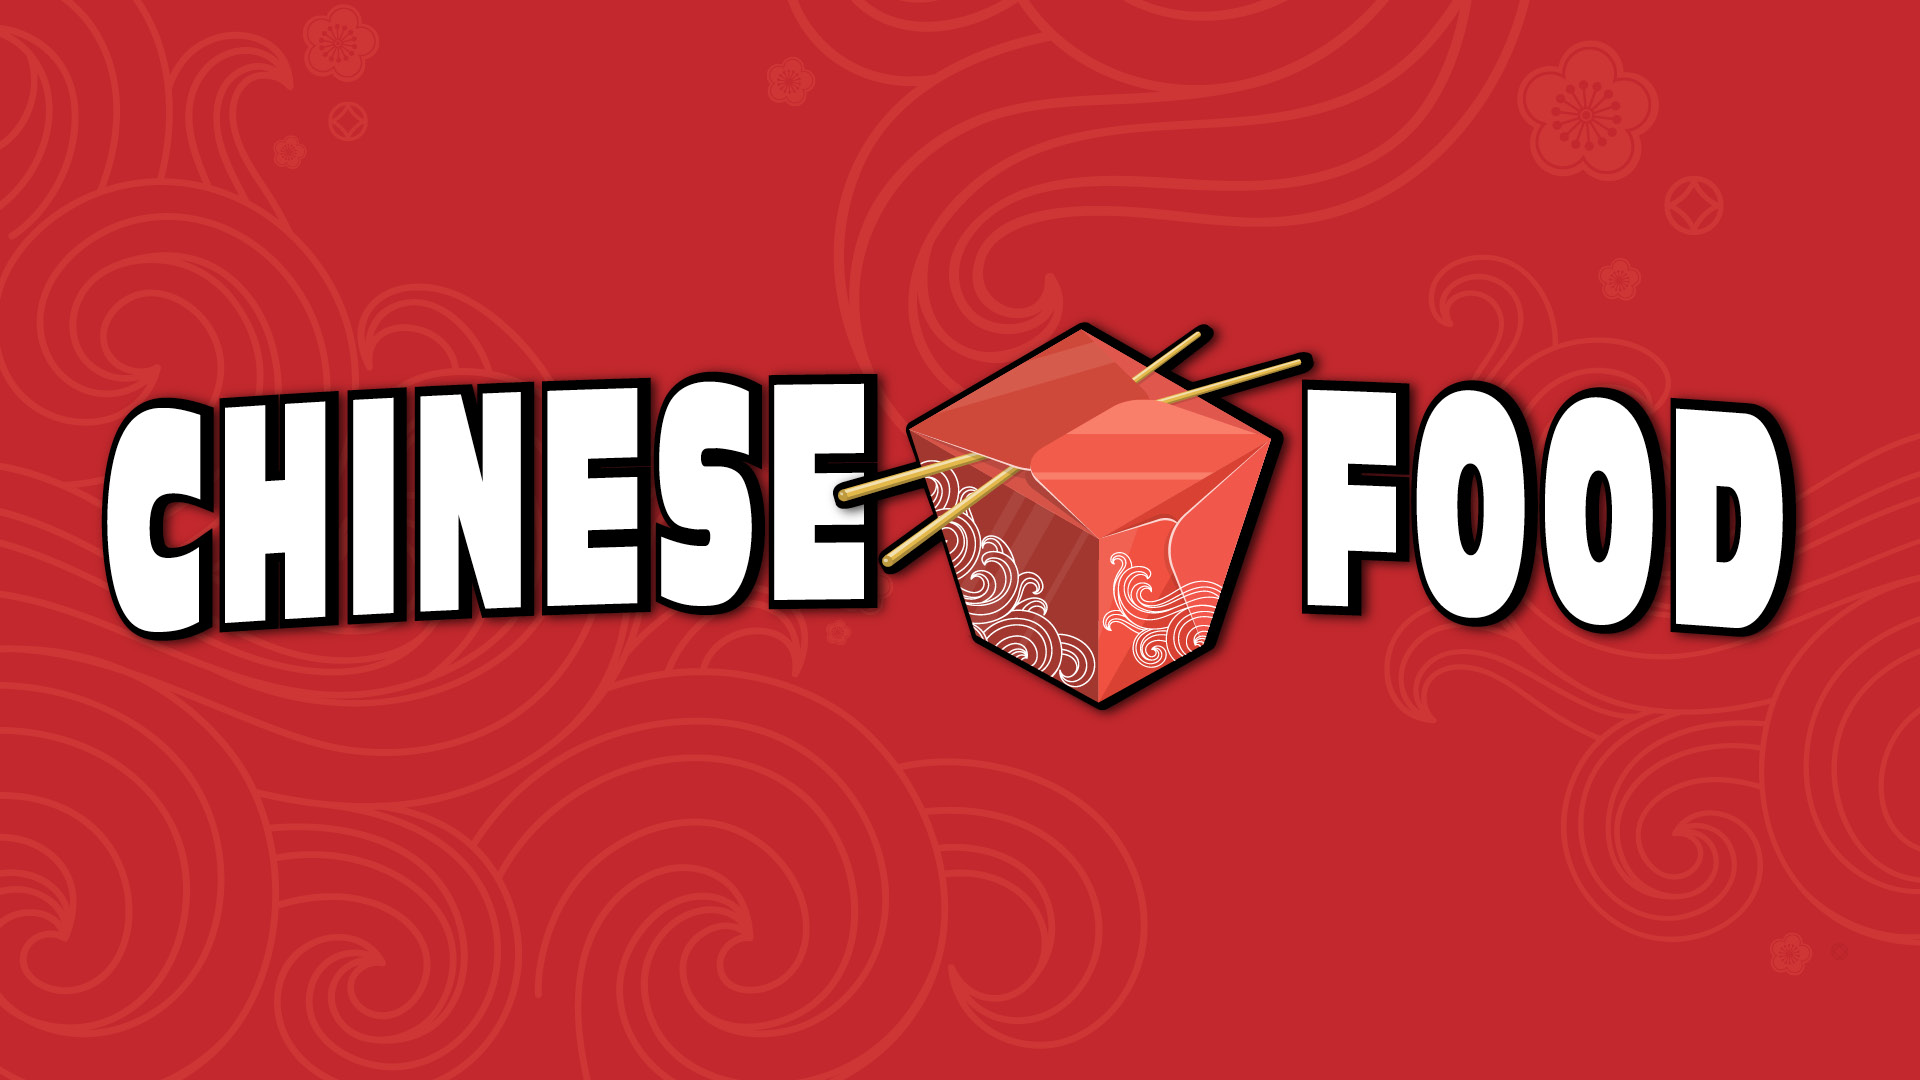 Chinese Food Cart